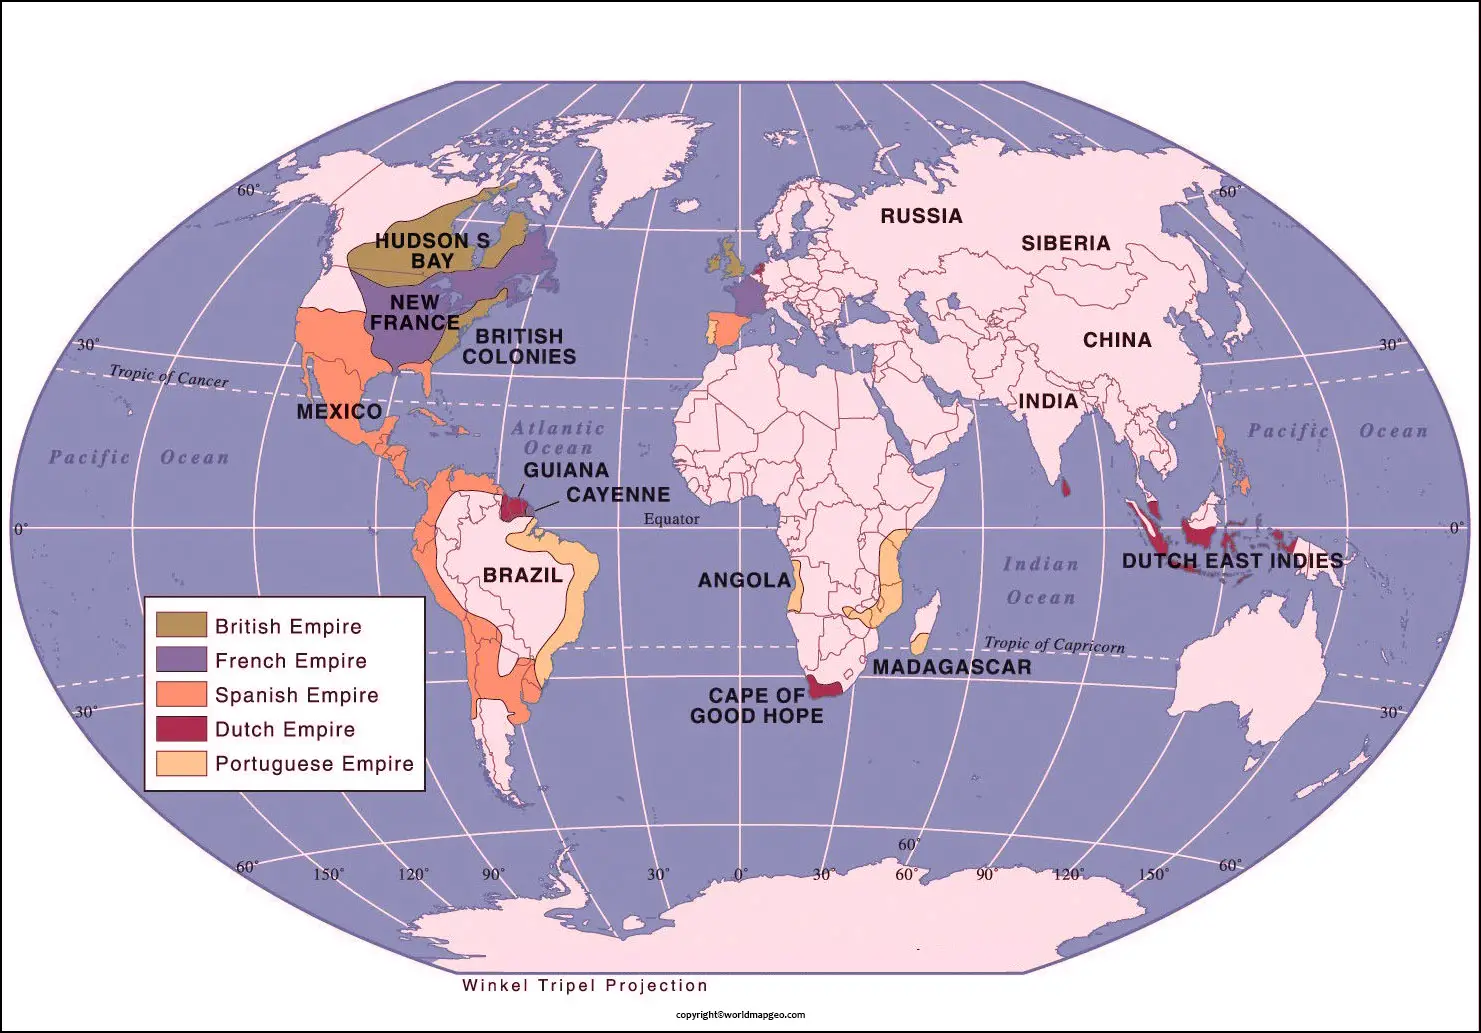 Tropic of Capricorn on Map